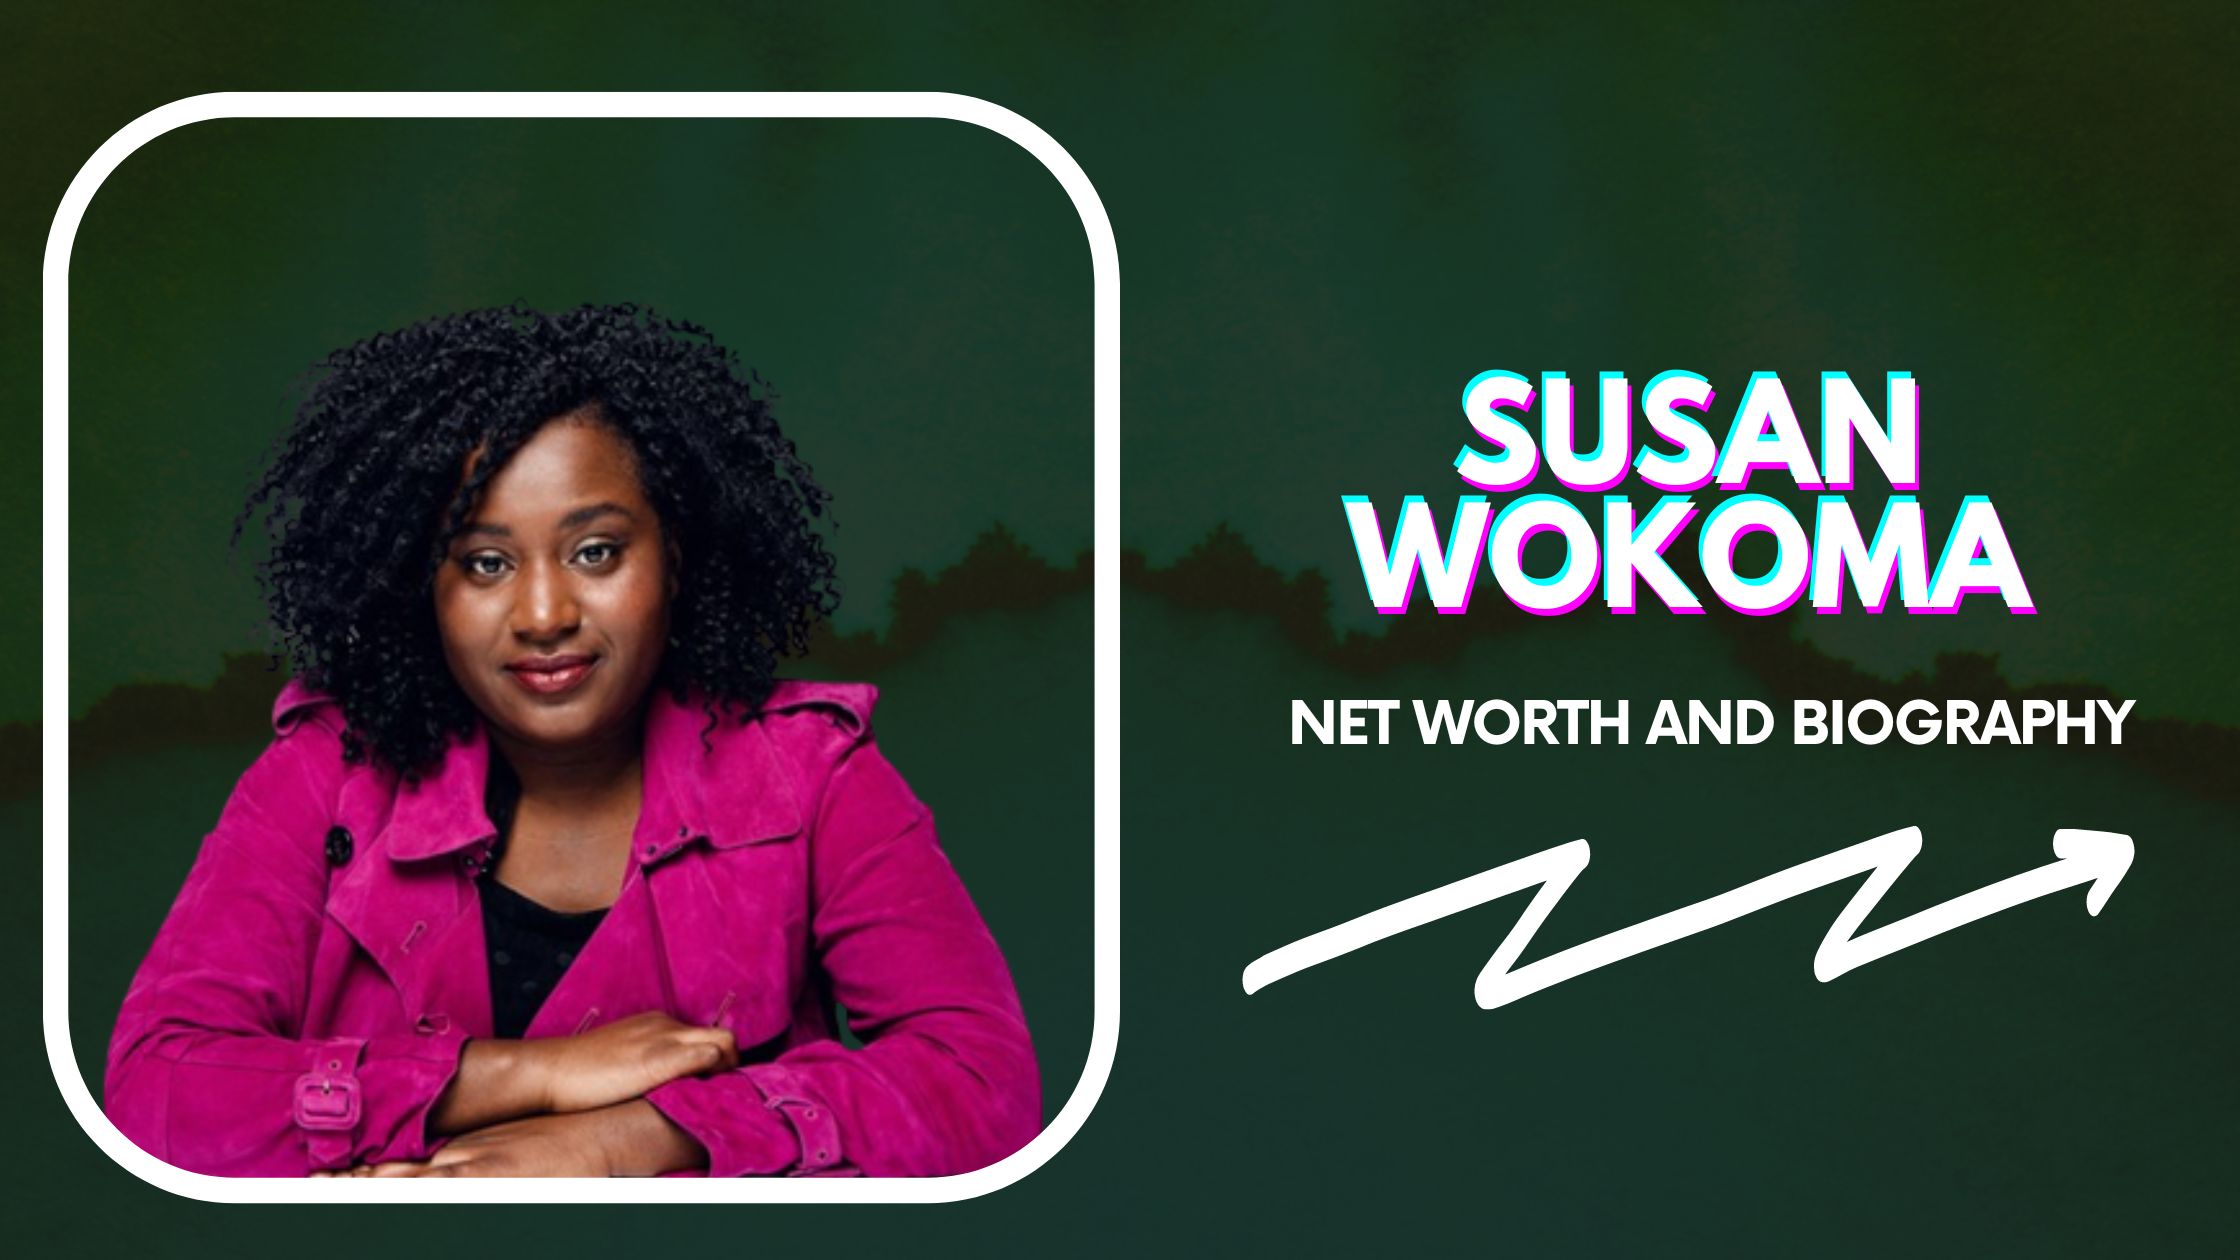 Susan Wokoma Net Worth And Biography